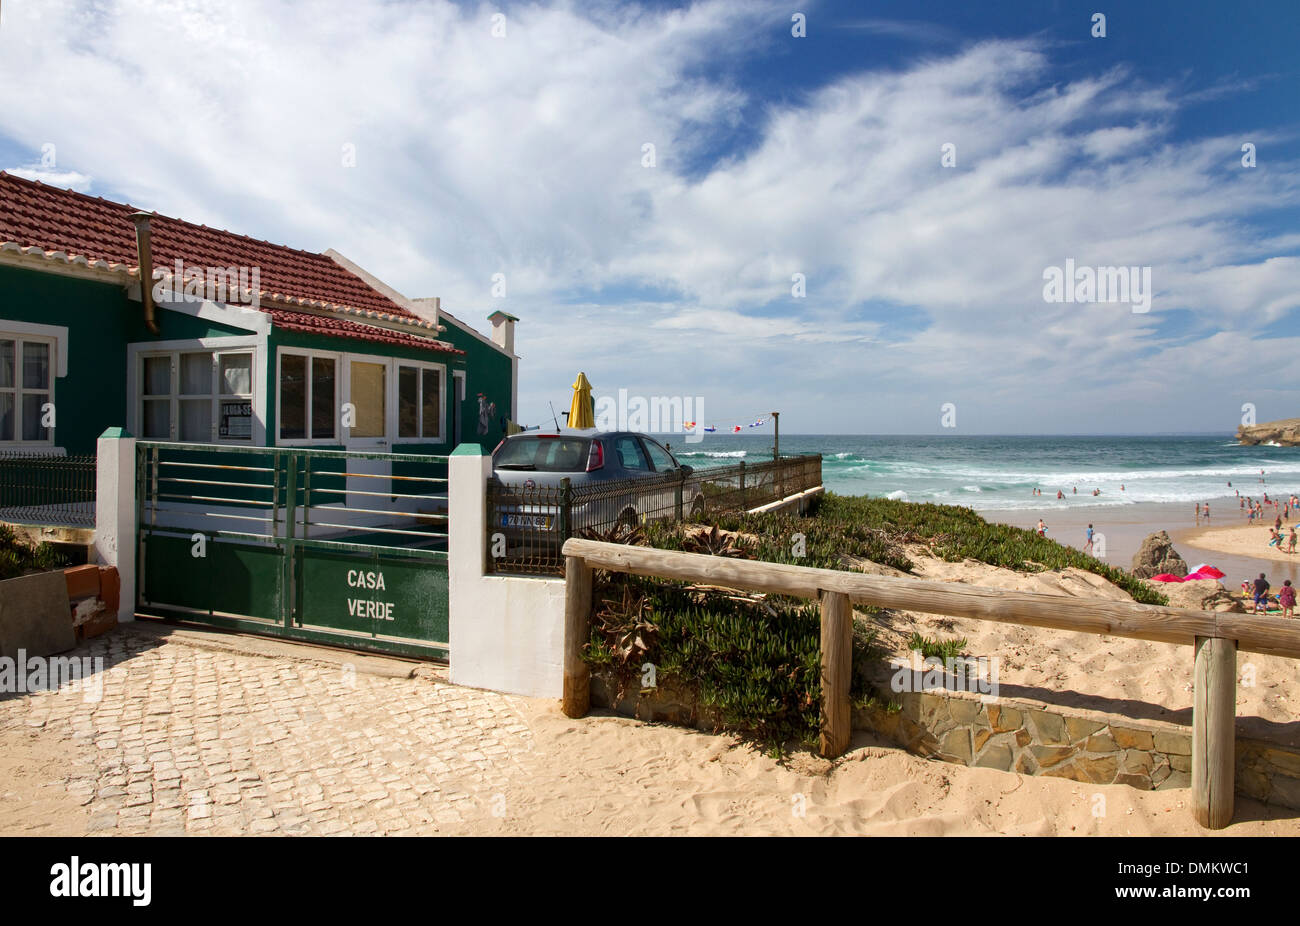 Holiday cottage overlooking the beach at Monte Clerigo, Aljezur. Western Algarve, Portugal. Stock Photo